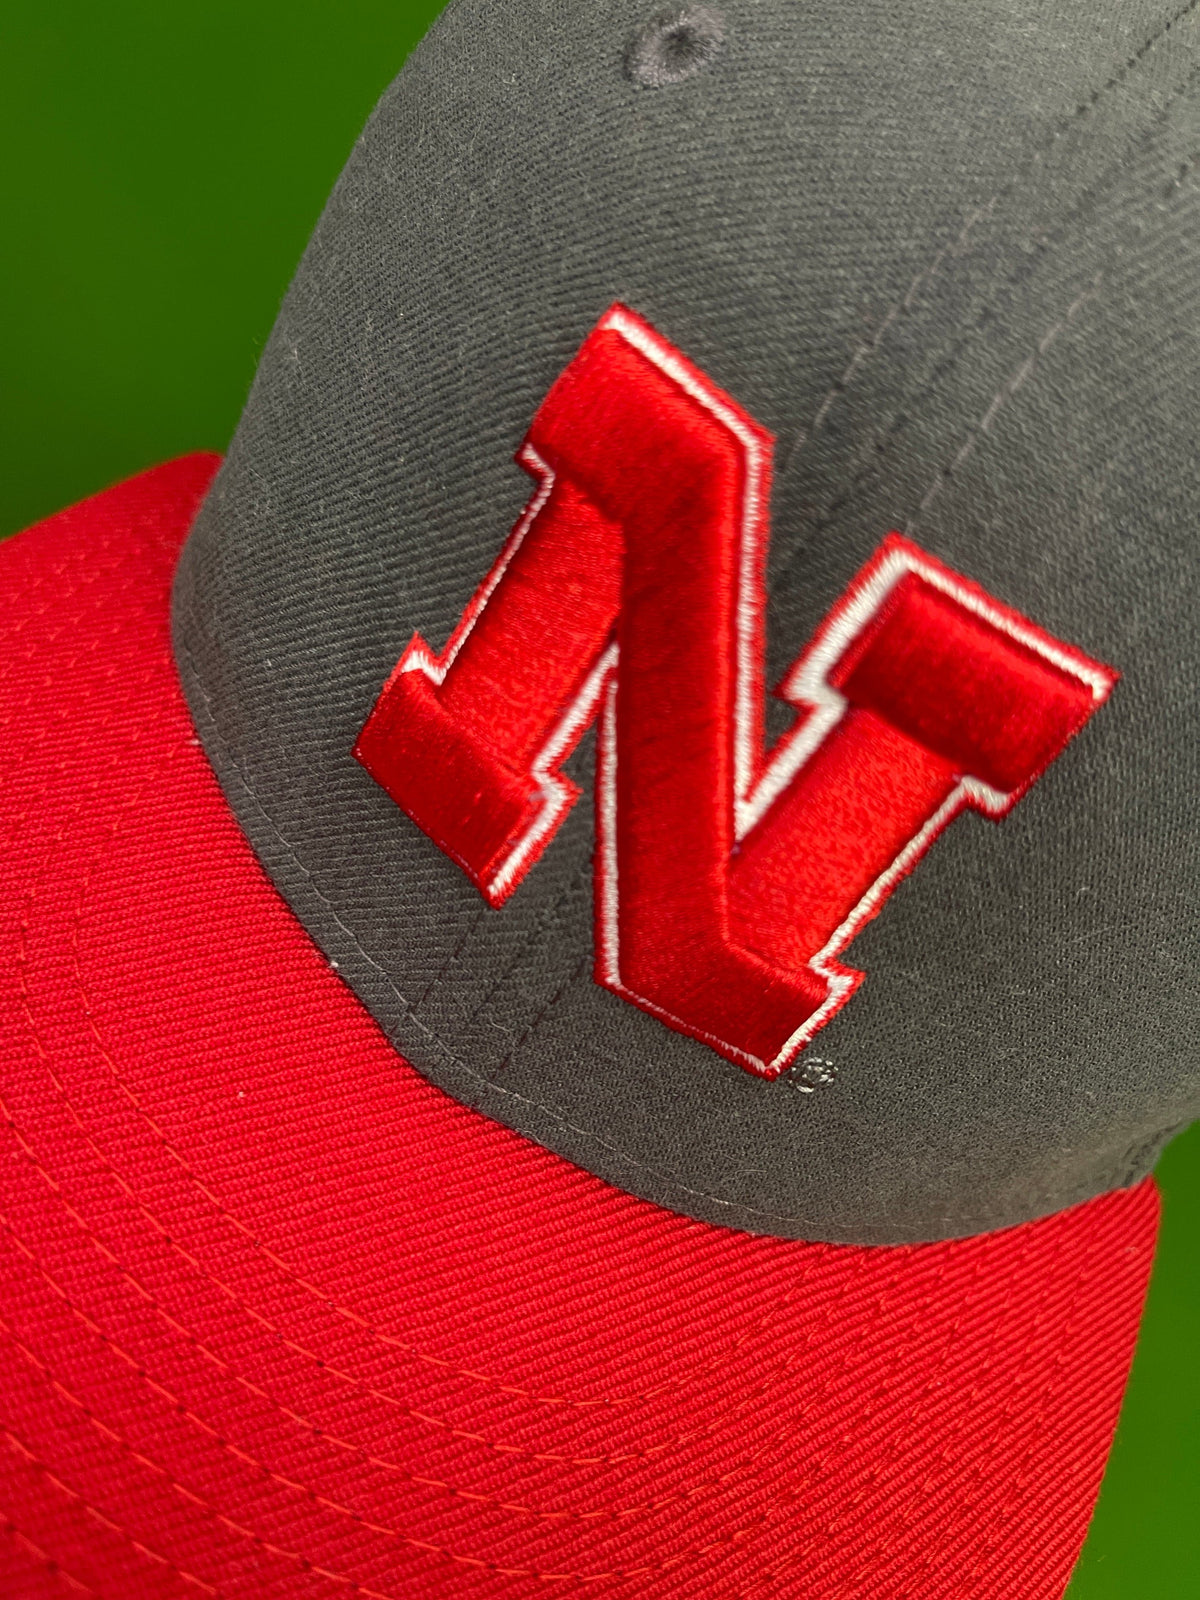 NCAA Nebraska Cornhuskers New Era 59FIFTY Baseball Cap/Hat Size 6-5/8 Youth